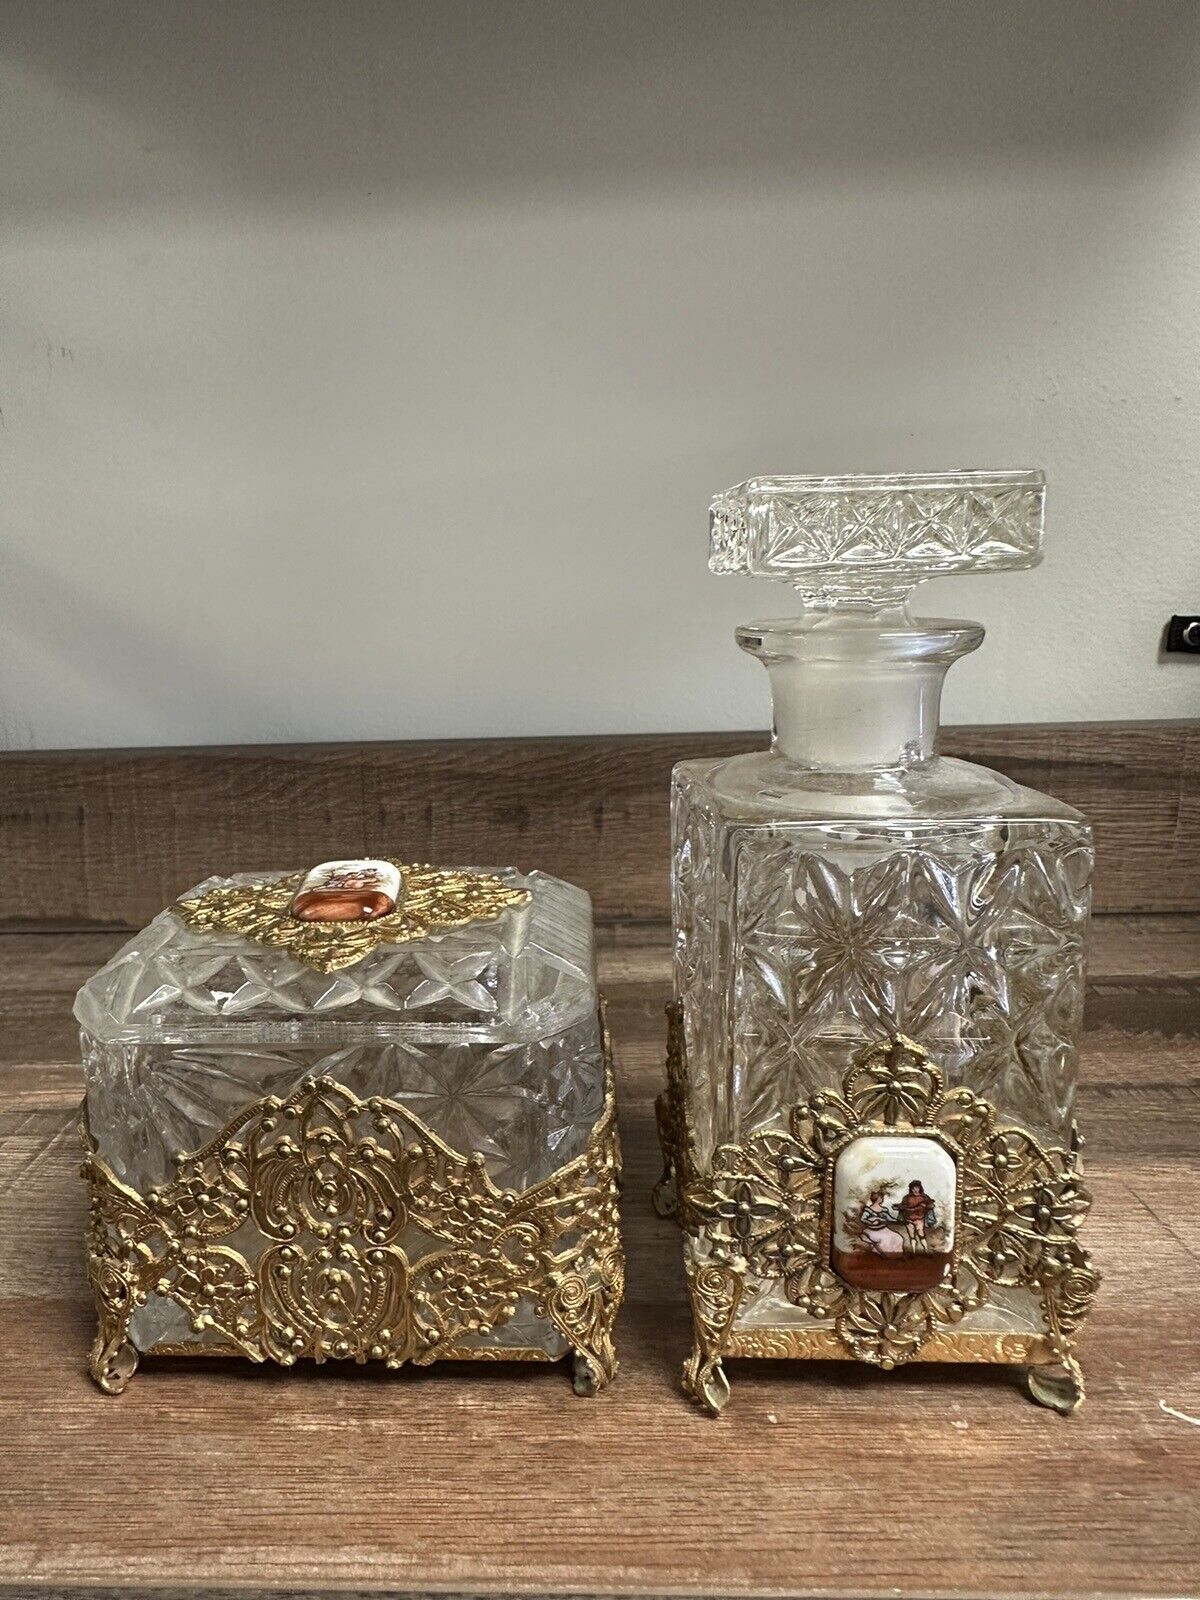 Vintage Fostoria Perfume Glass Bottle with Matching Trinket Box Set Used Ornate